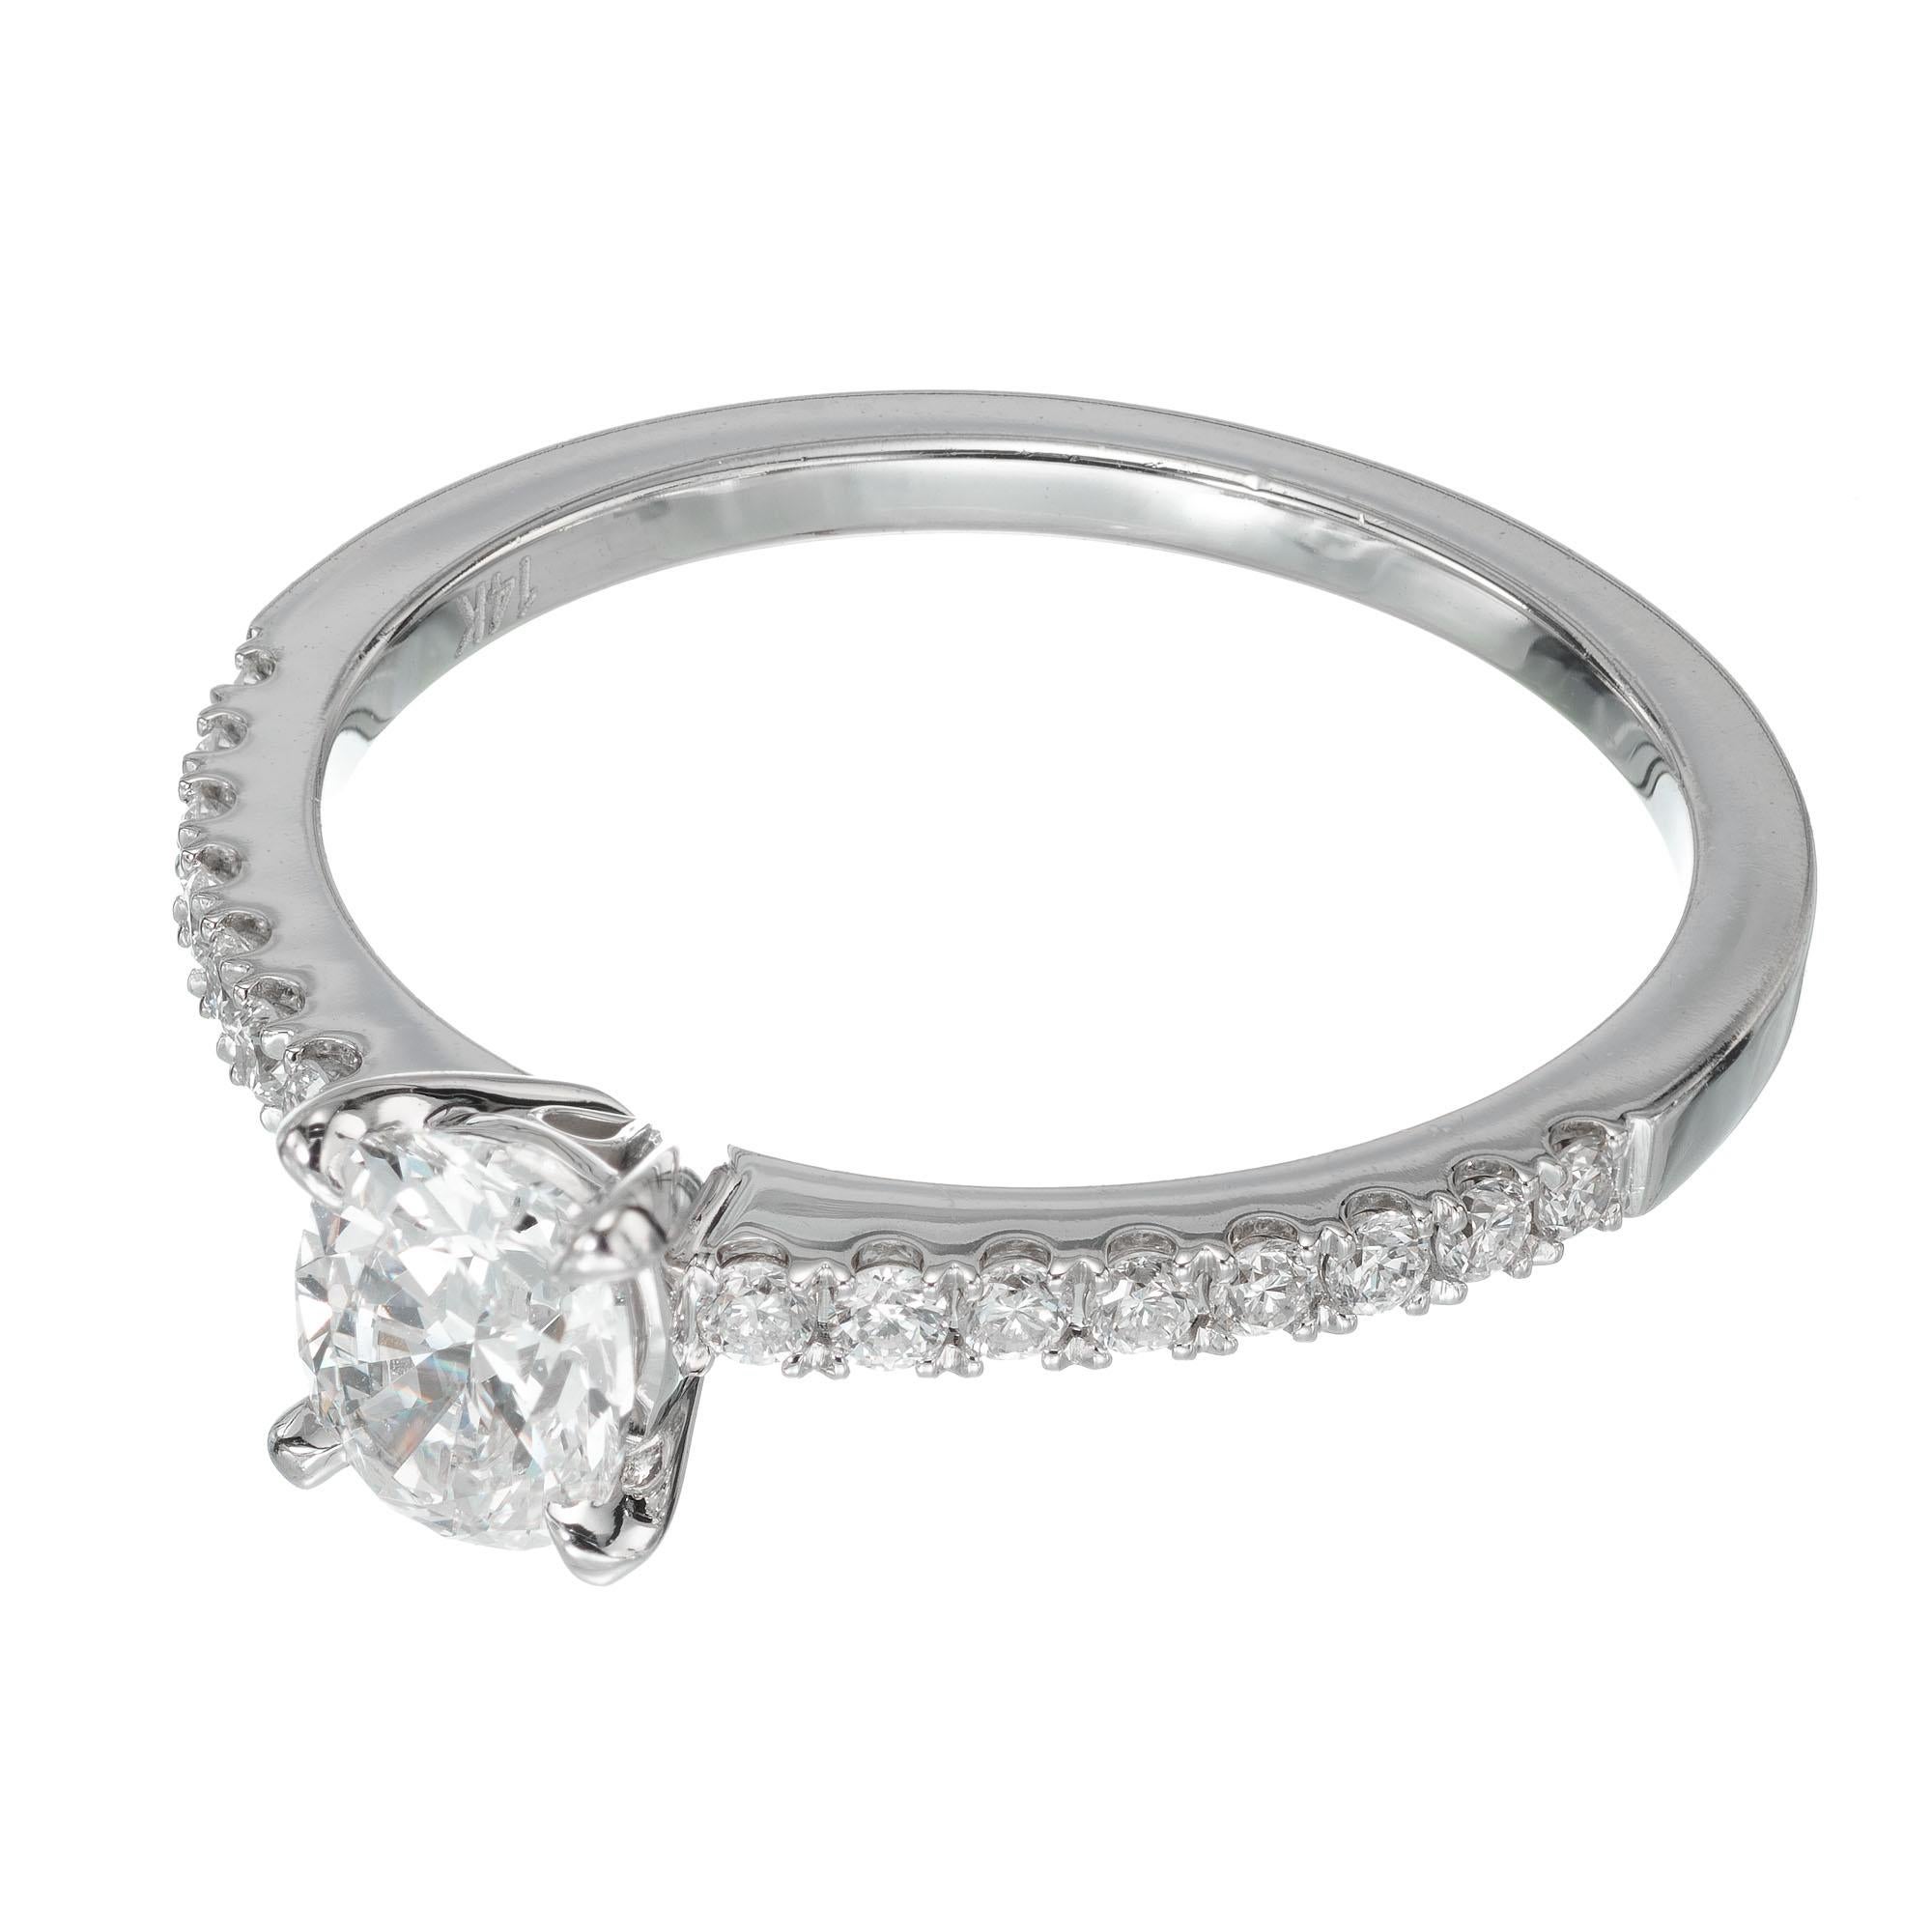 .55 carat diamond ring